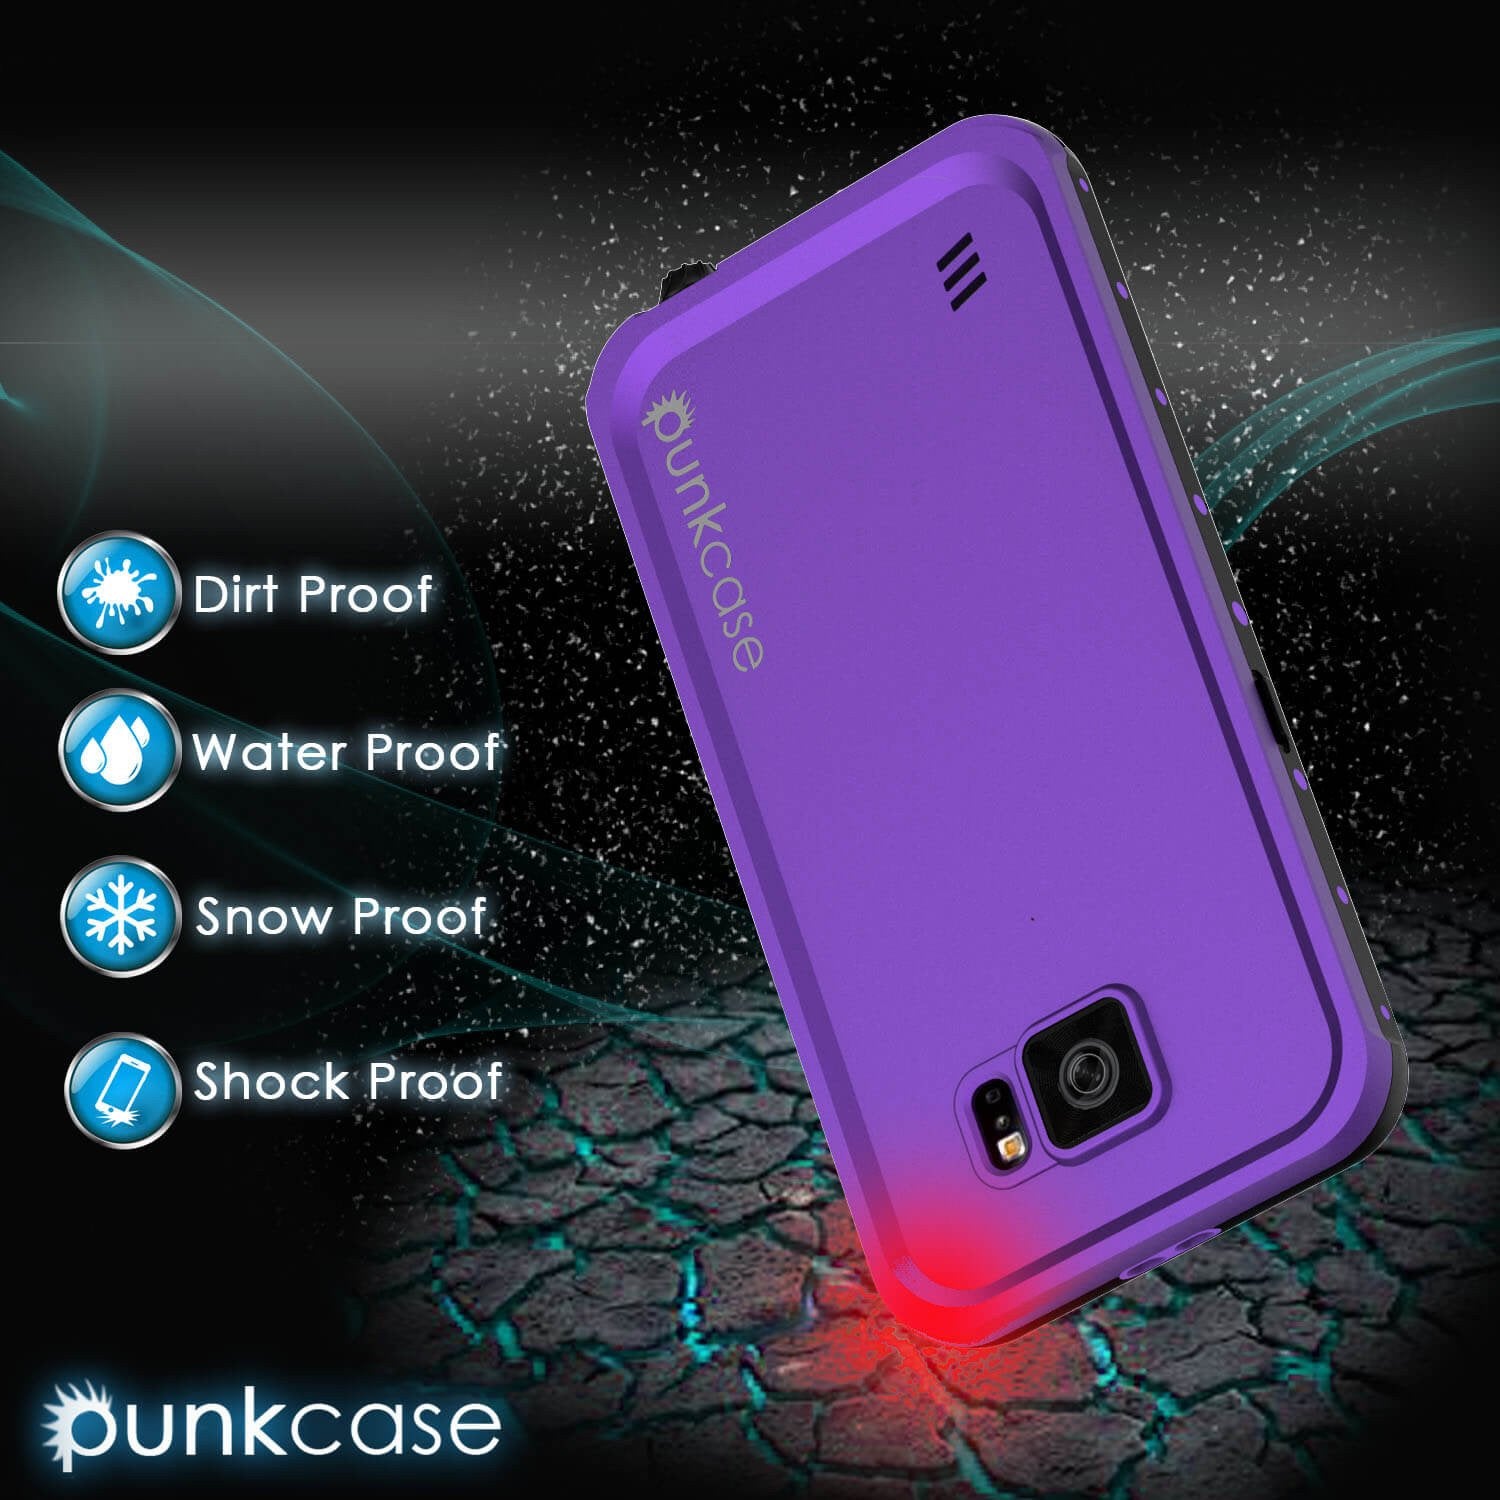 Galaxy S6 Waterproof Case PunkCase StudStar Purple Thin 6.6ft Underwater IP68 Shock/Dirt/Snow Proof